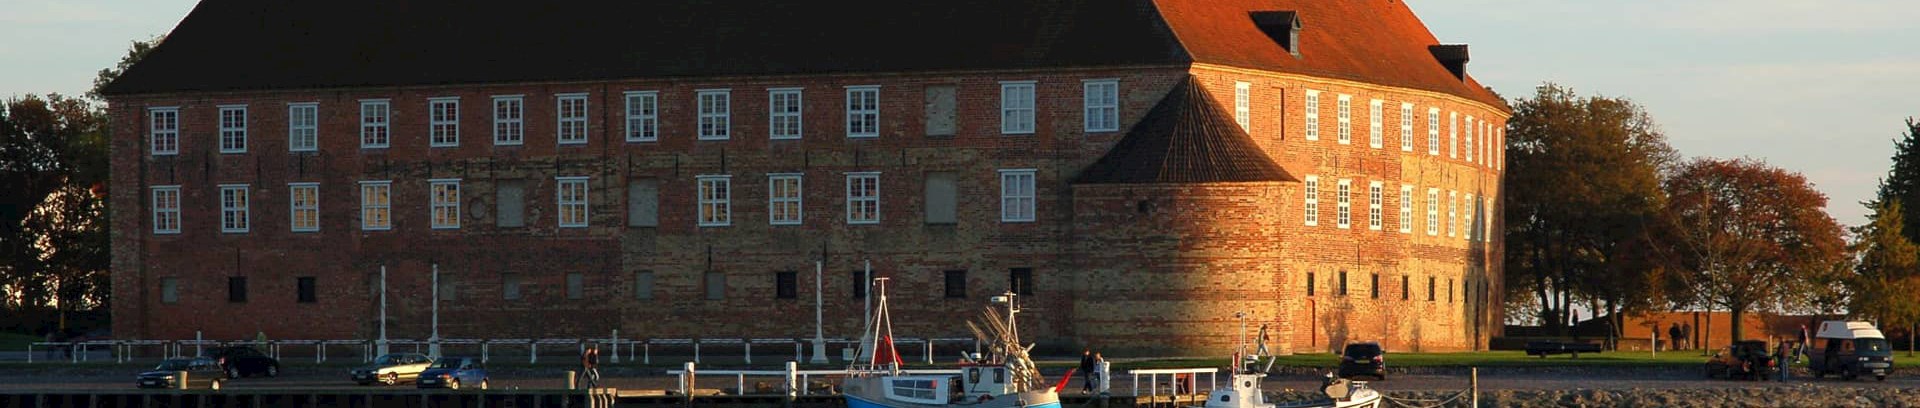 Sønderborg slot, tur i grænselandet med FOF Aarhus